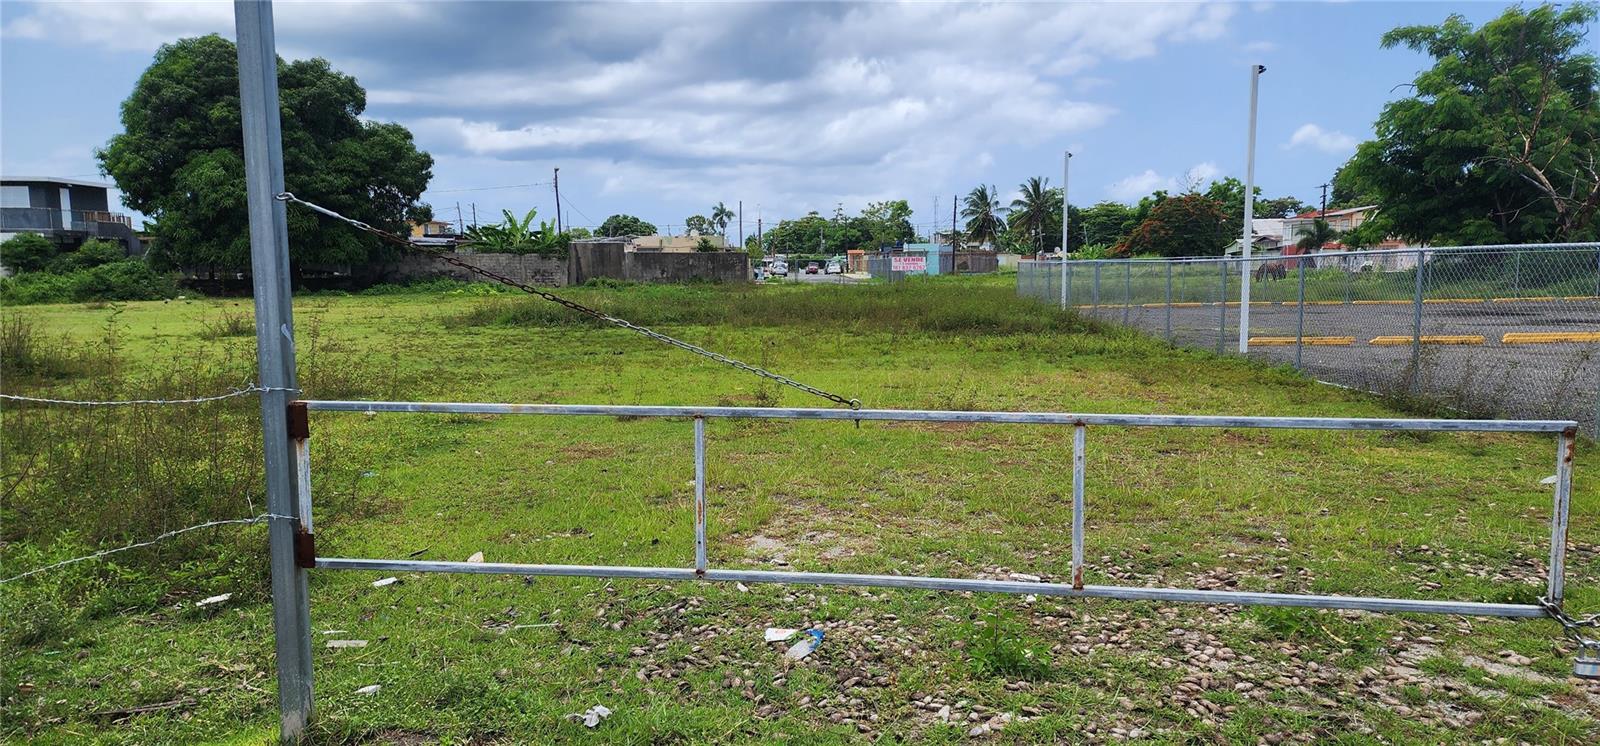 DOMINGO ORTIZ, Mayaguez, Puerto Rico 00681, ,Land,For Sale,DOMINGO ORTIZ,PR9101856